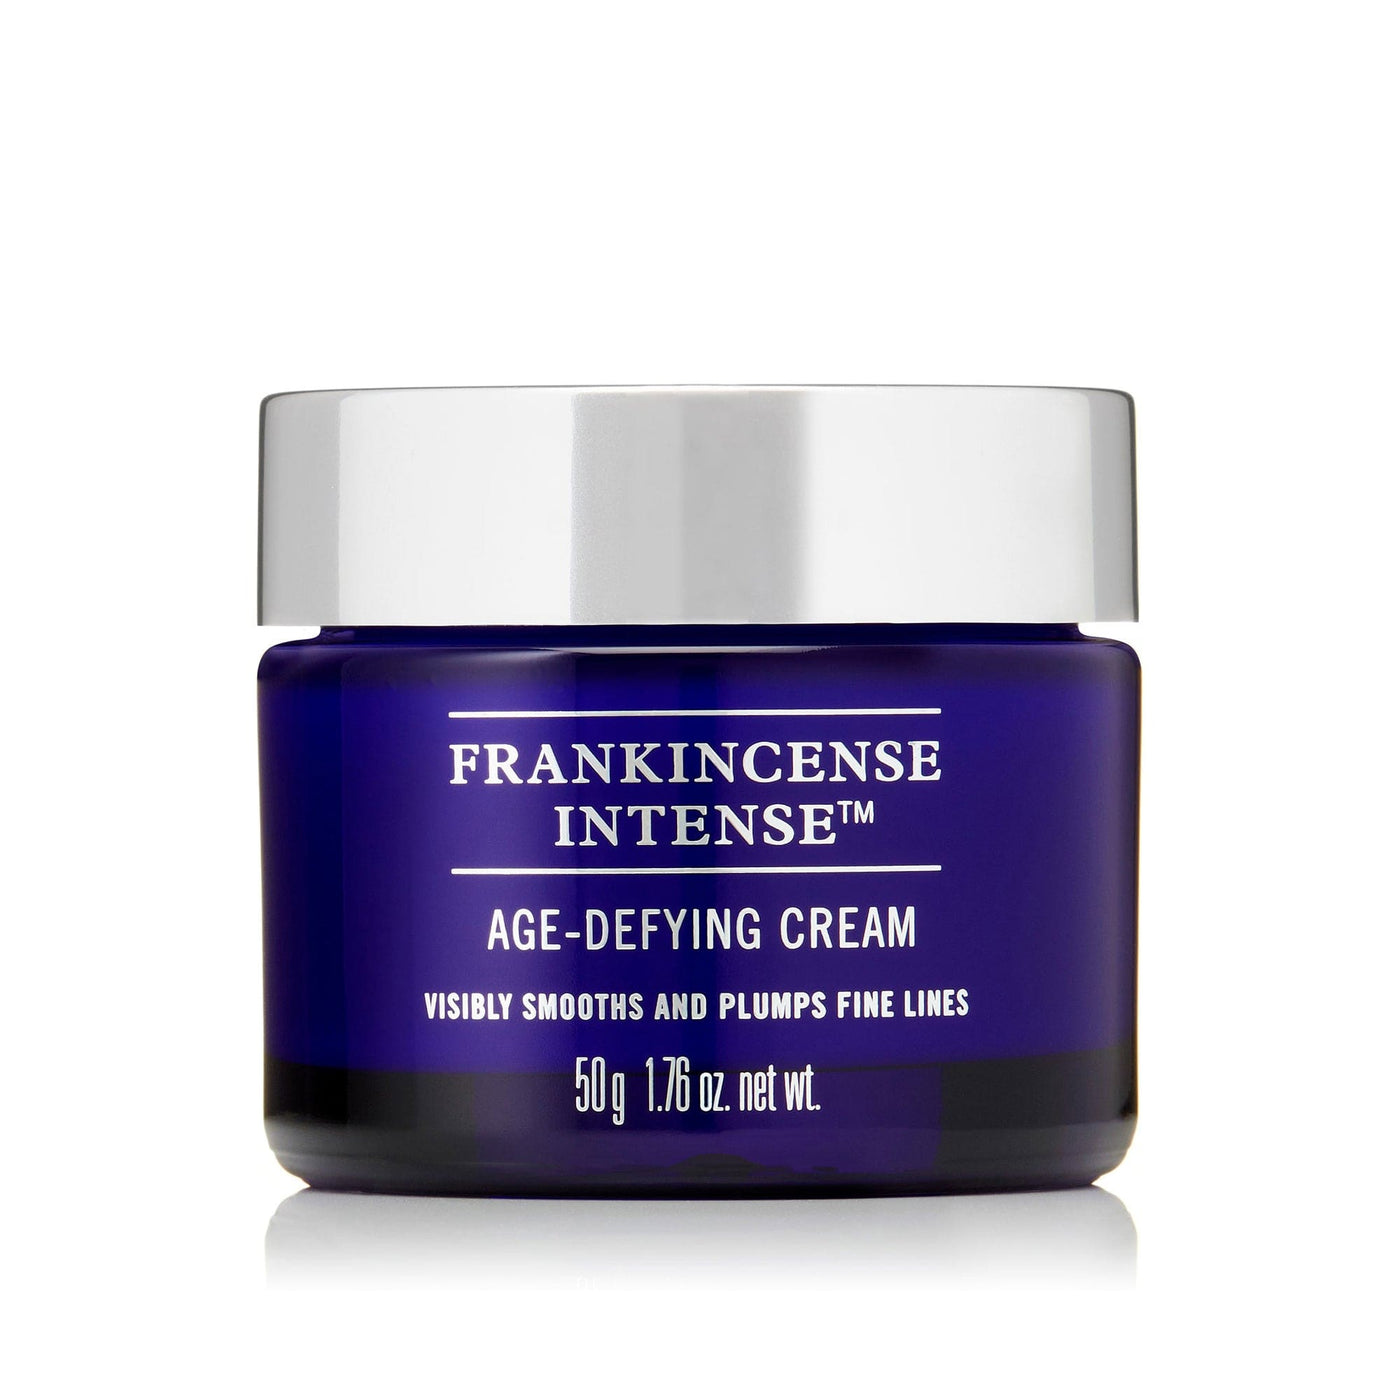 Neal's Yard Remedies Frankincense Intense™ Age-Defying Cream 50g